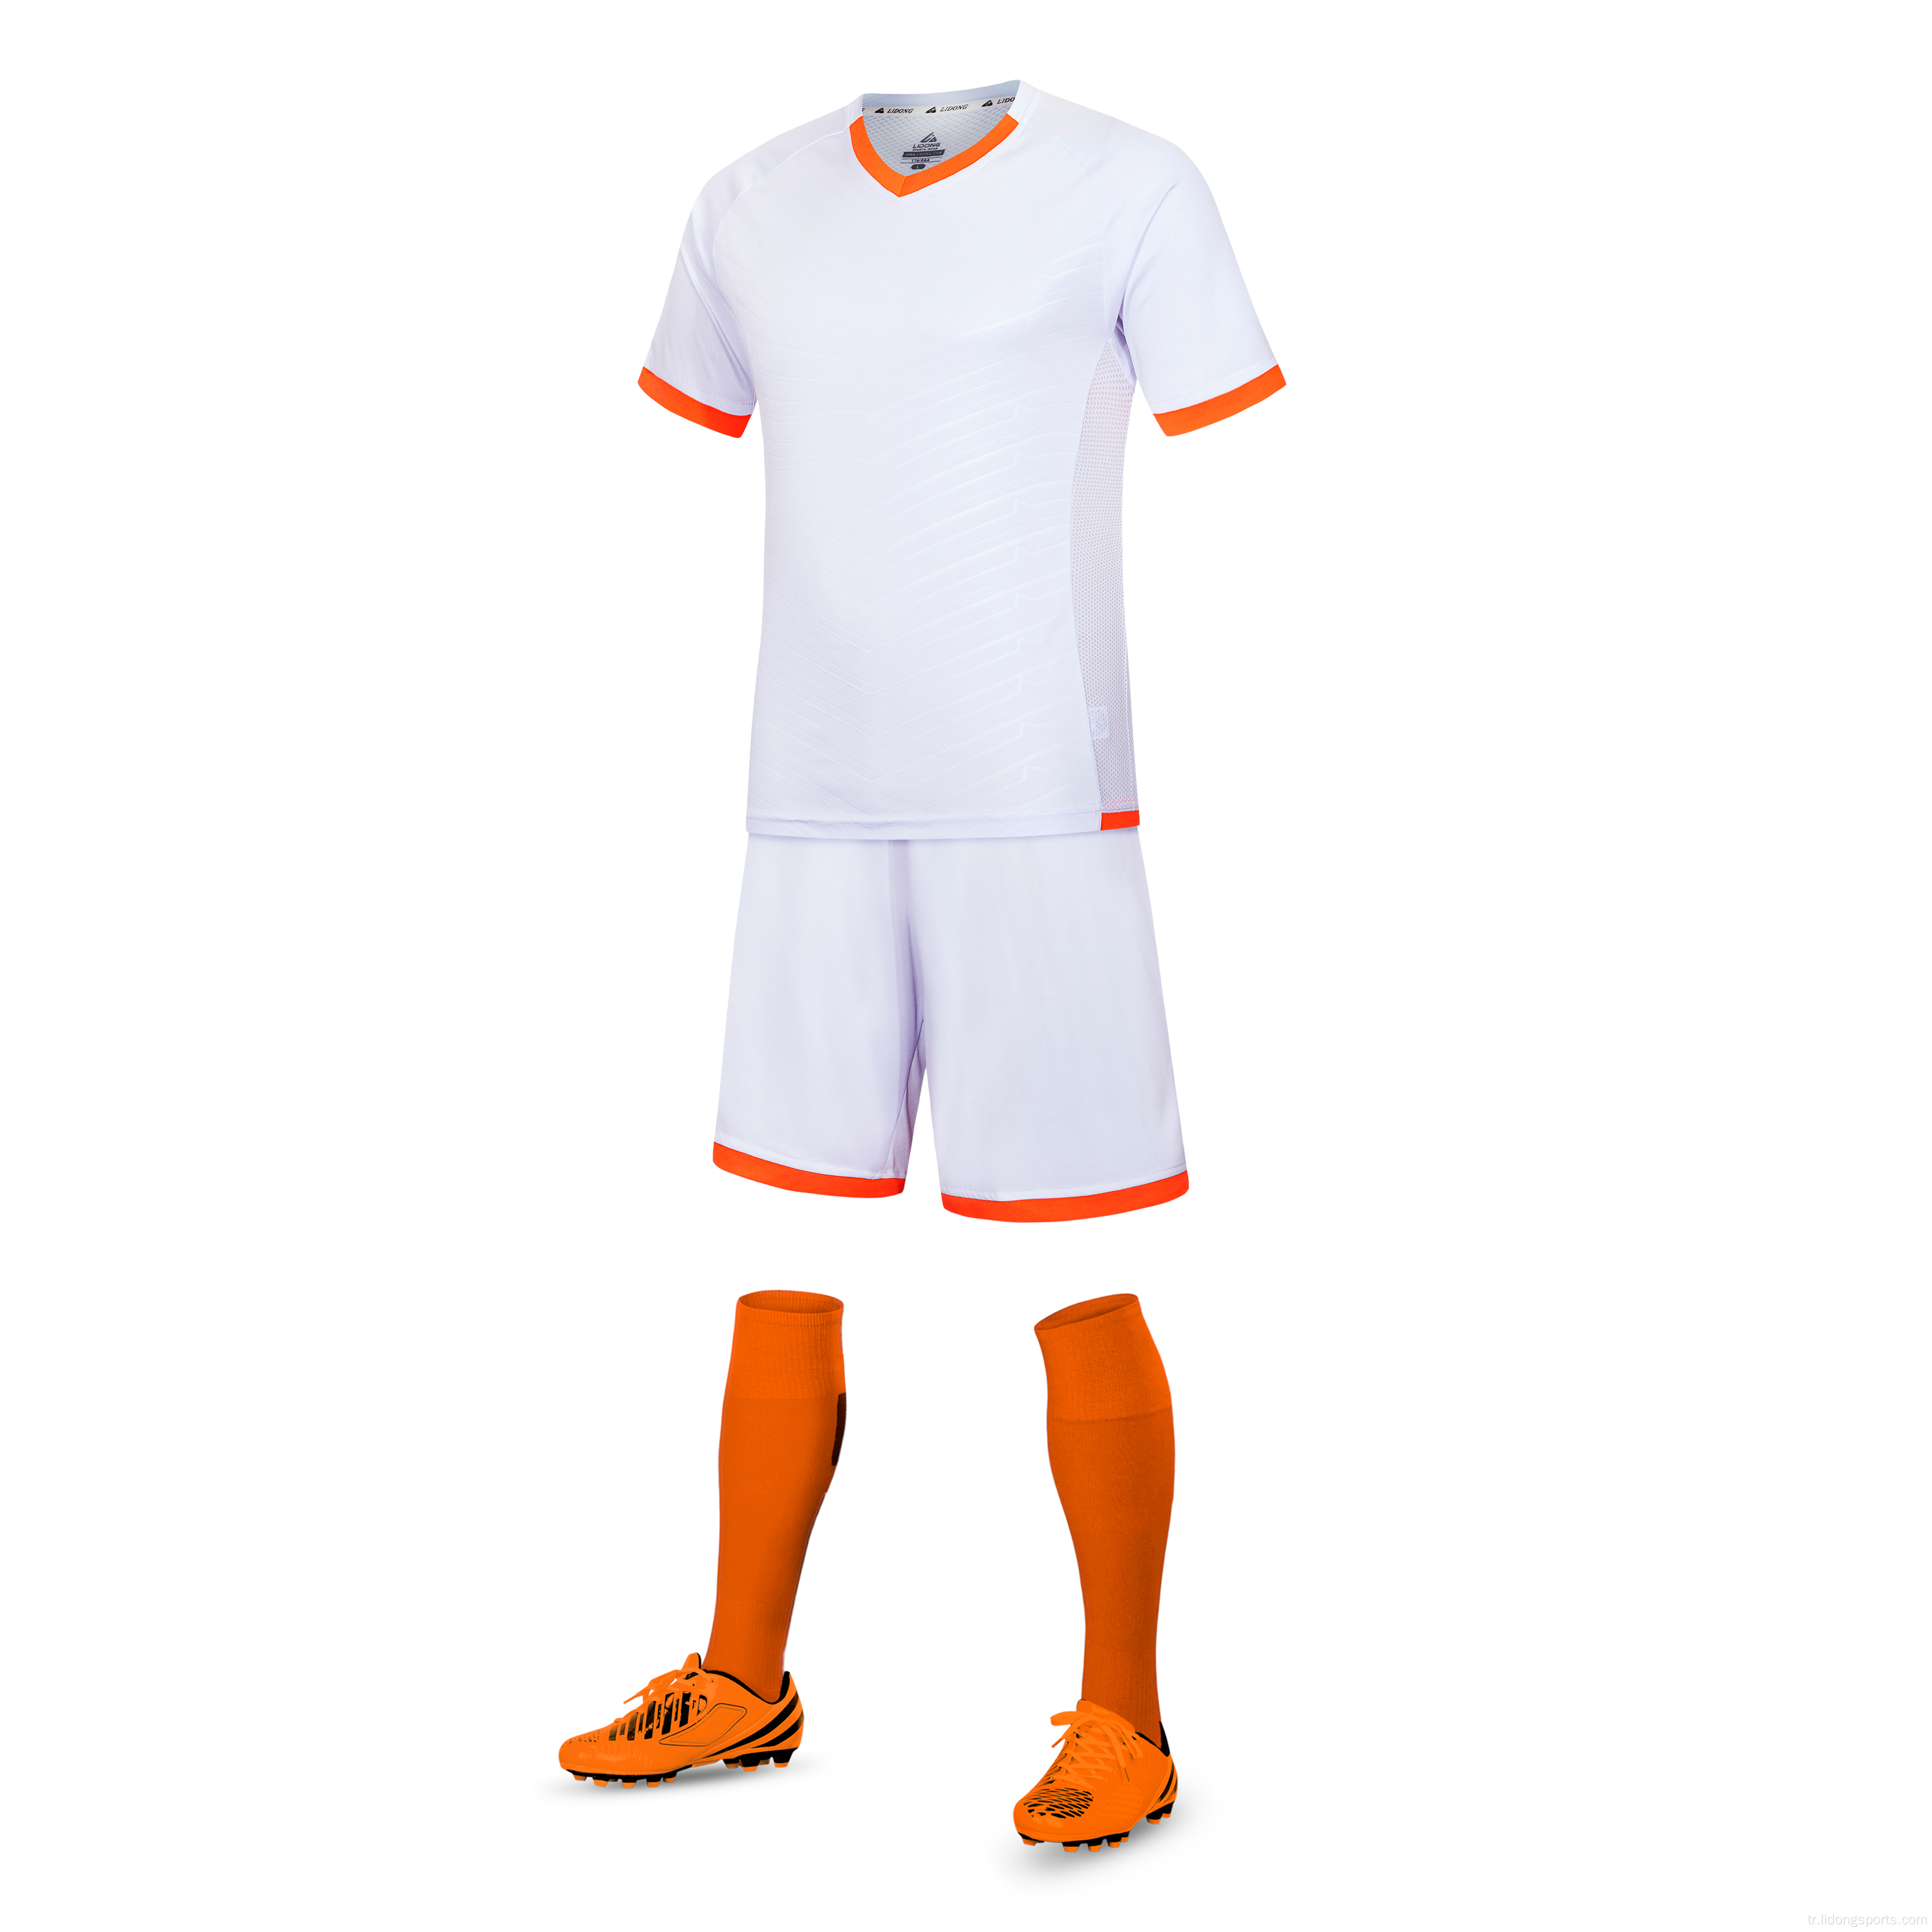 Toptan futbol üniforma seti/gençlik futbol forması seti